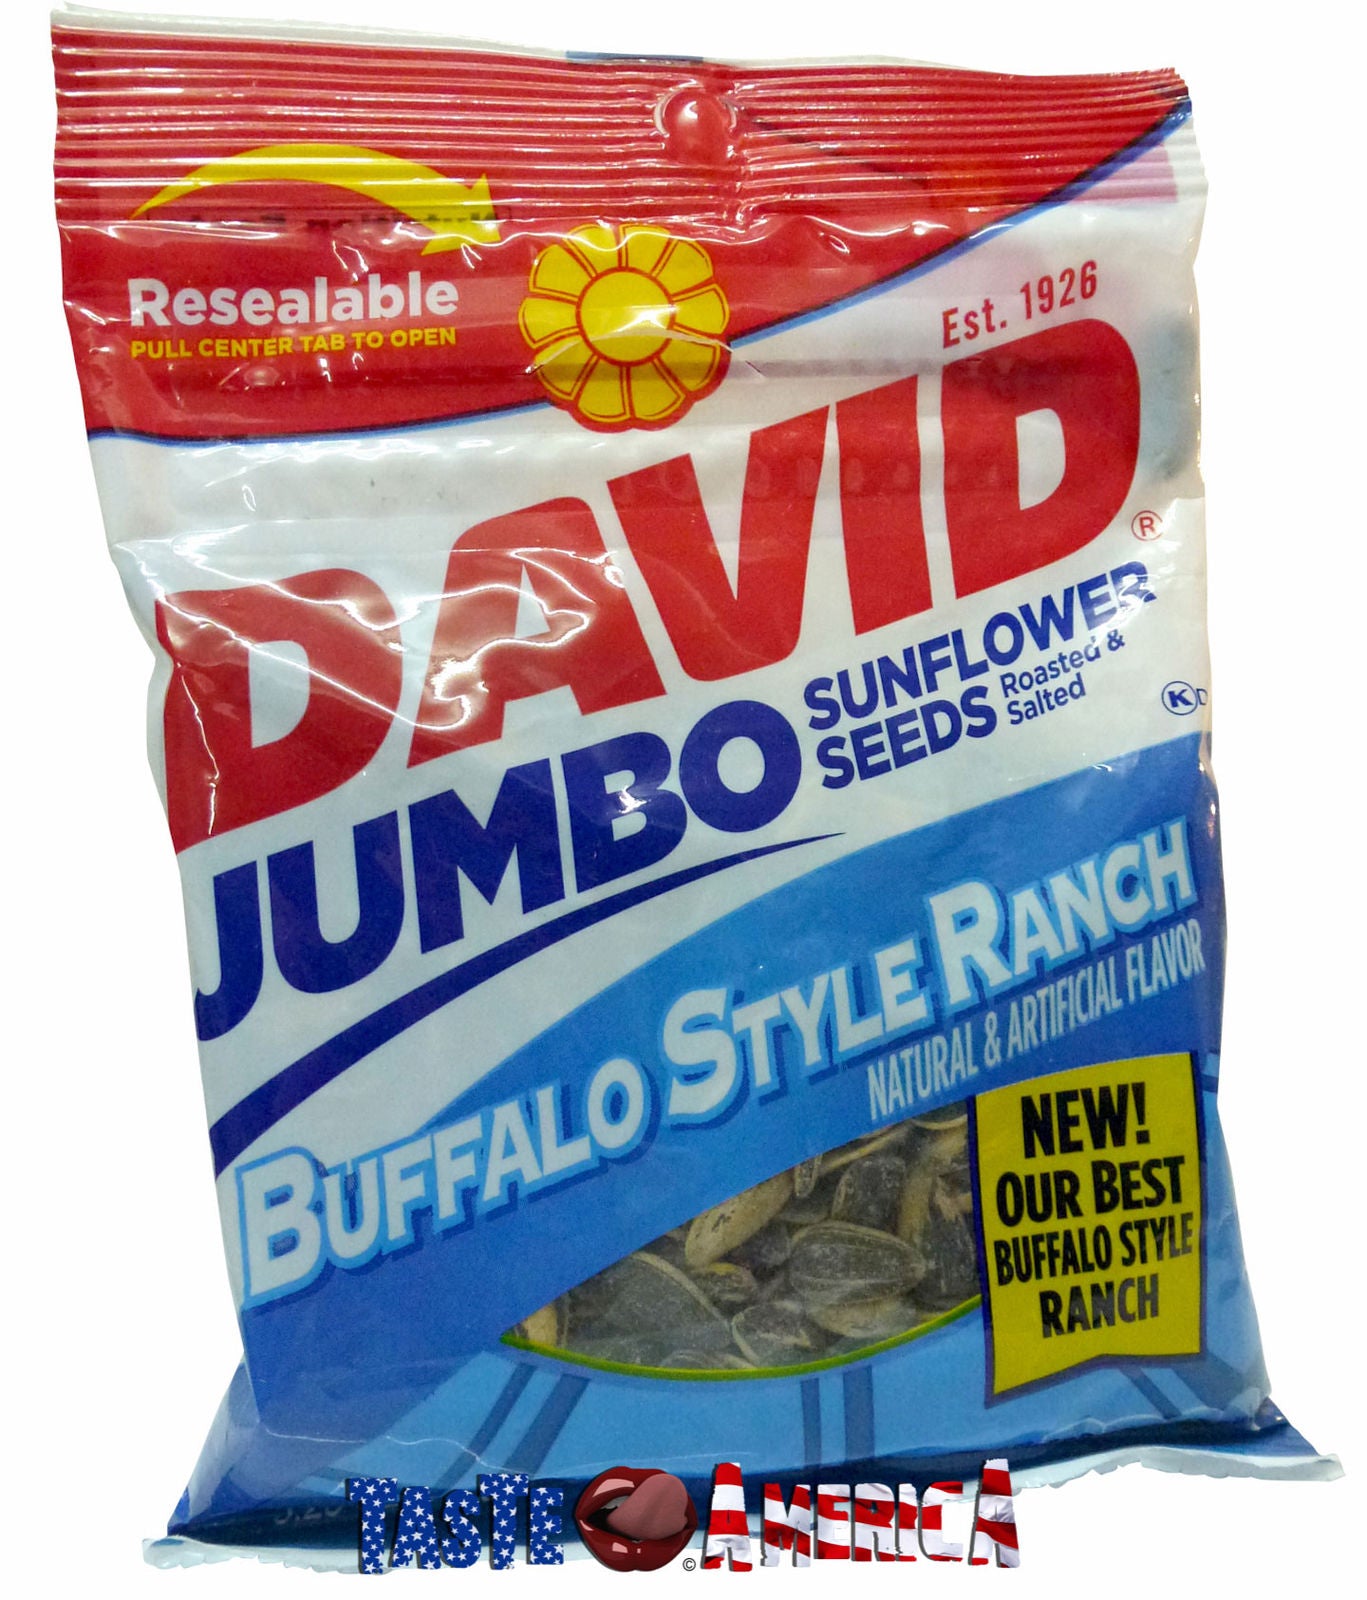 David Jumbo Seeds Buffalo Style Ranch, 5.25 oz